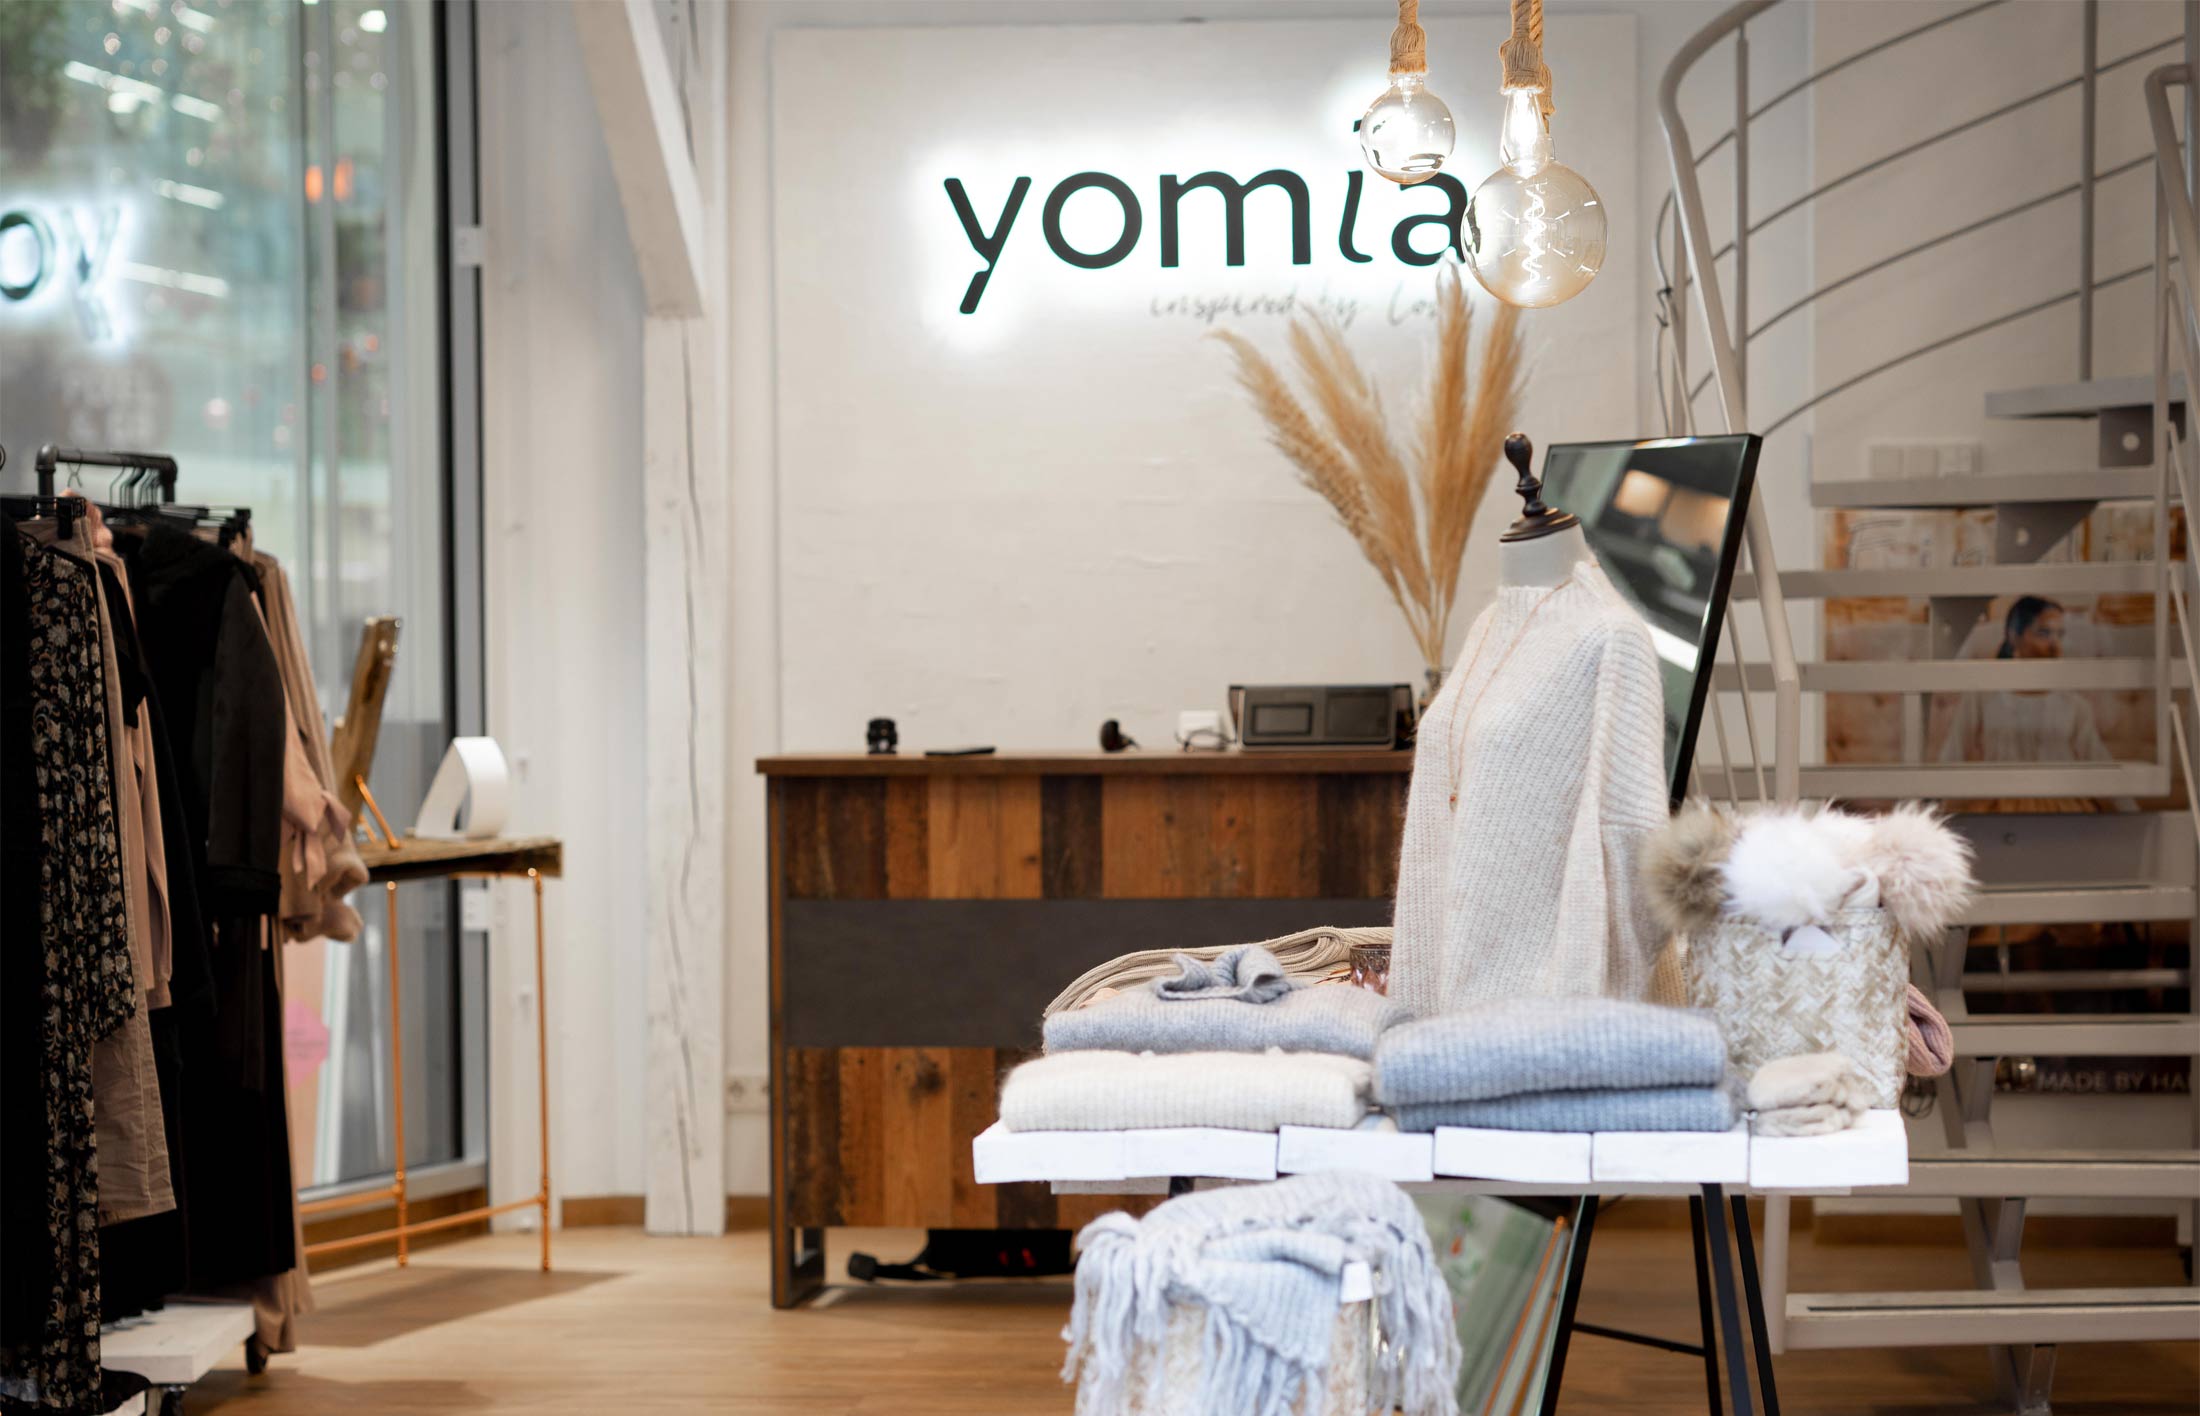 Yomia Shop Linz